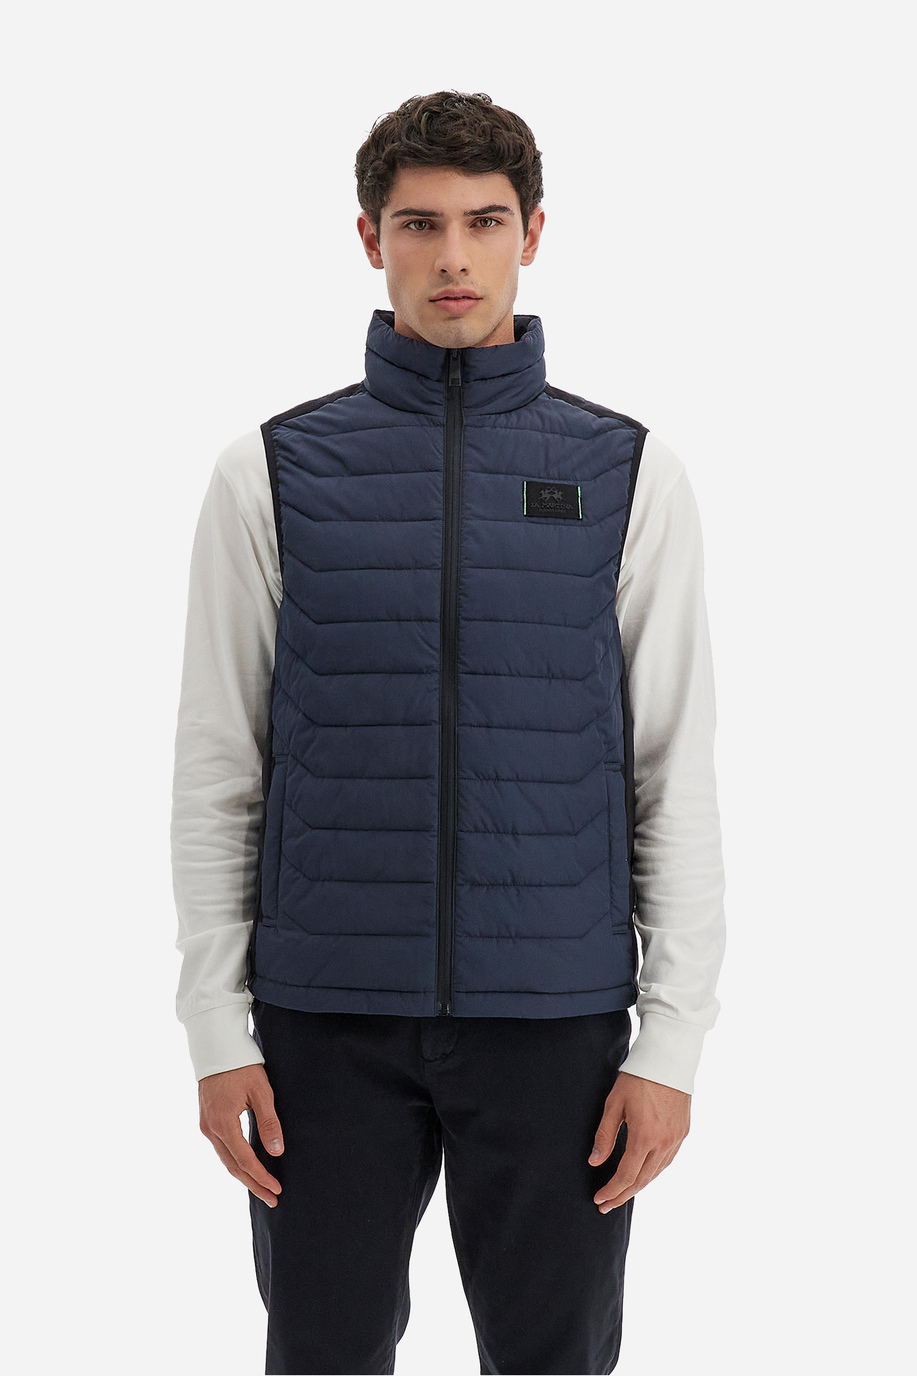 Men's sleeveless bomber jacket full zip high collar Logos - Varen - Our favourites for him | La Martina - Official Online Shop